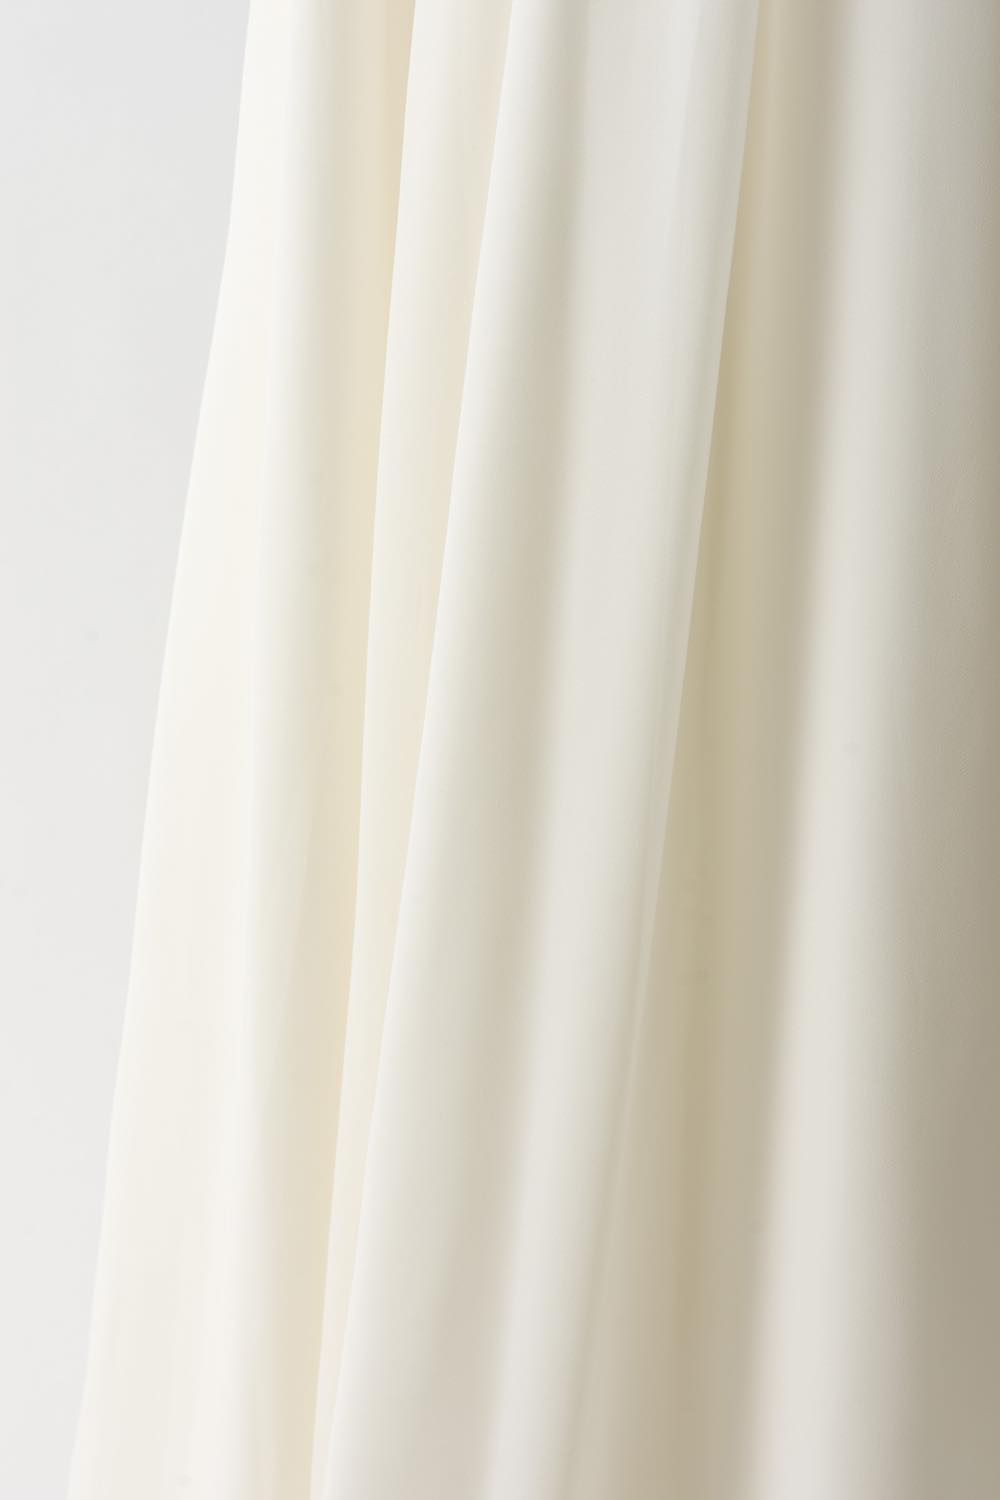 [50%OFF] SL006 Wedding dress size 0,2